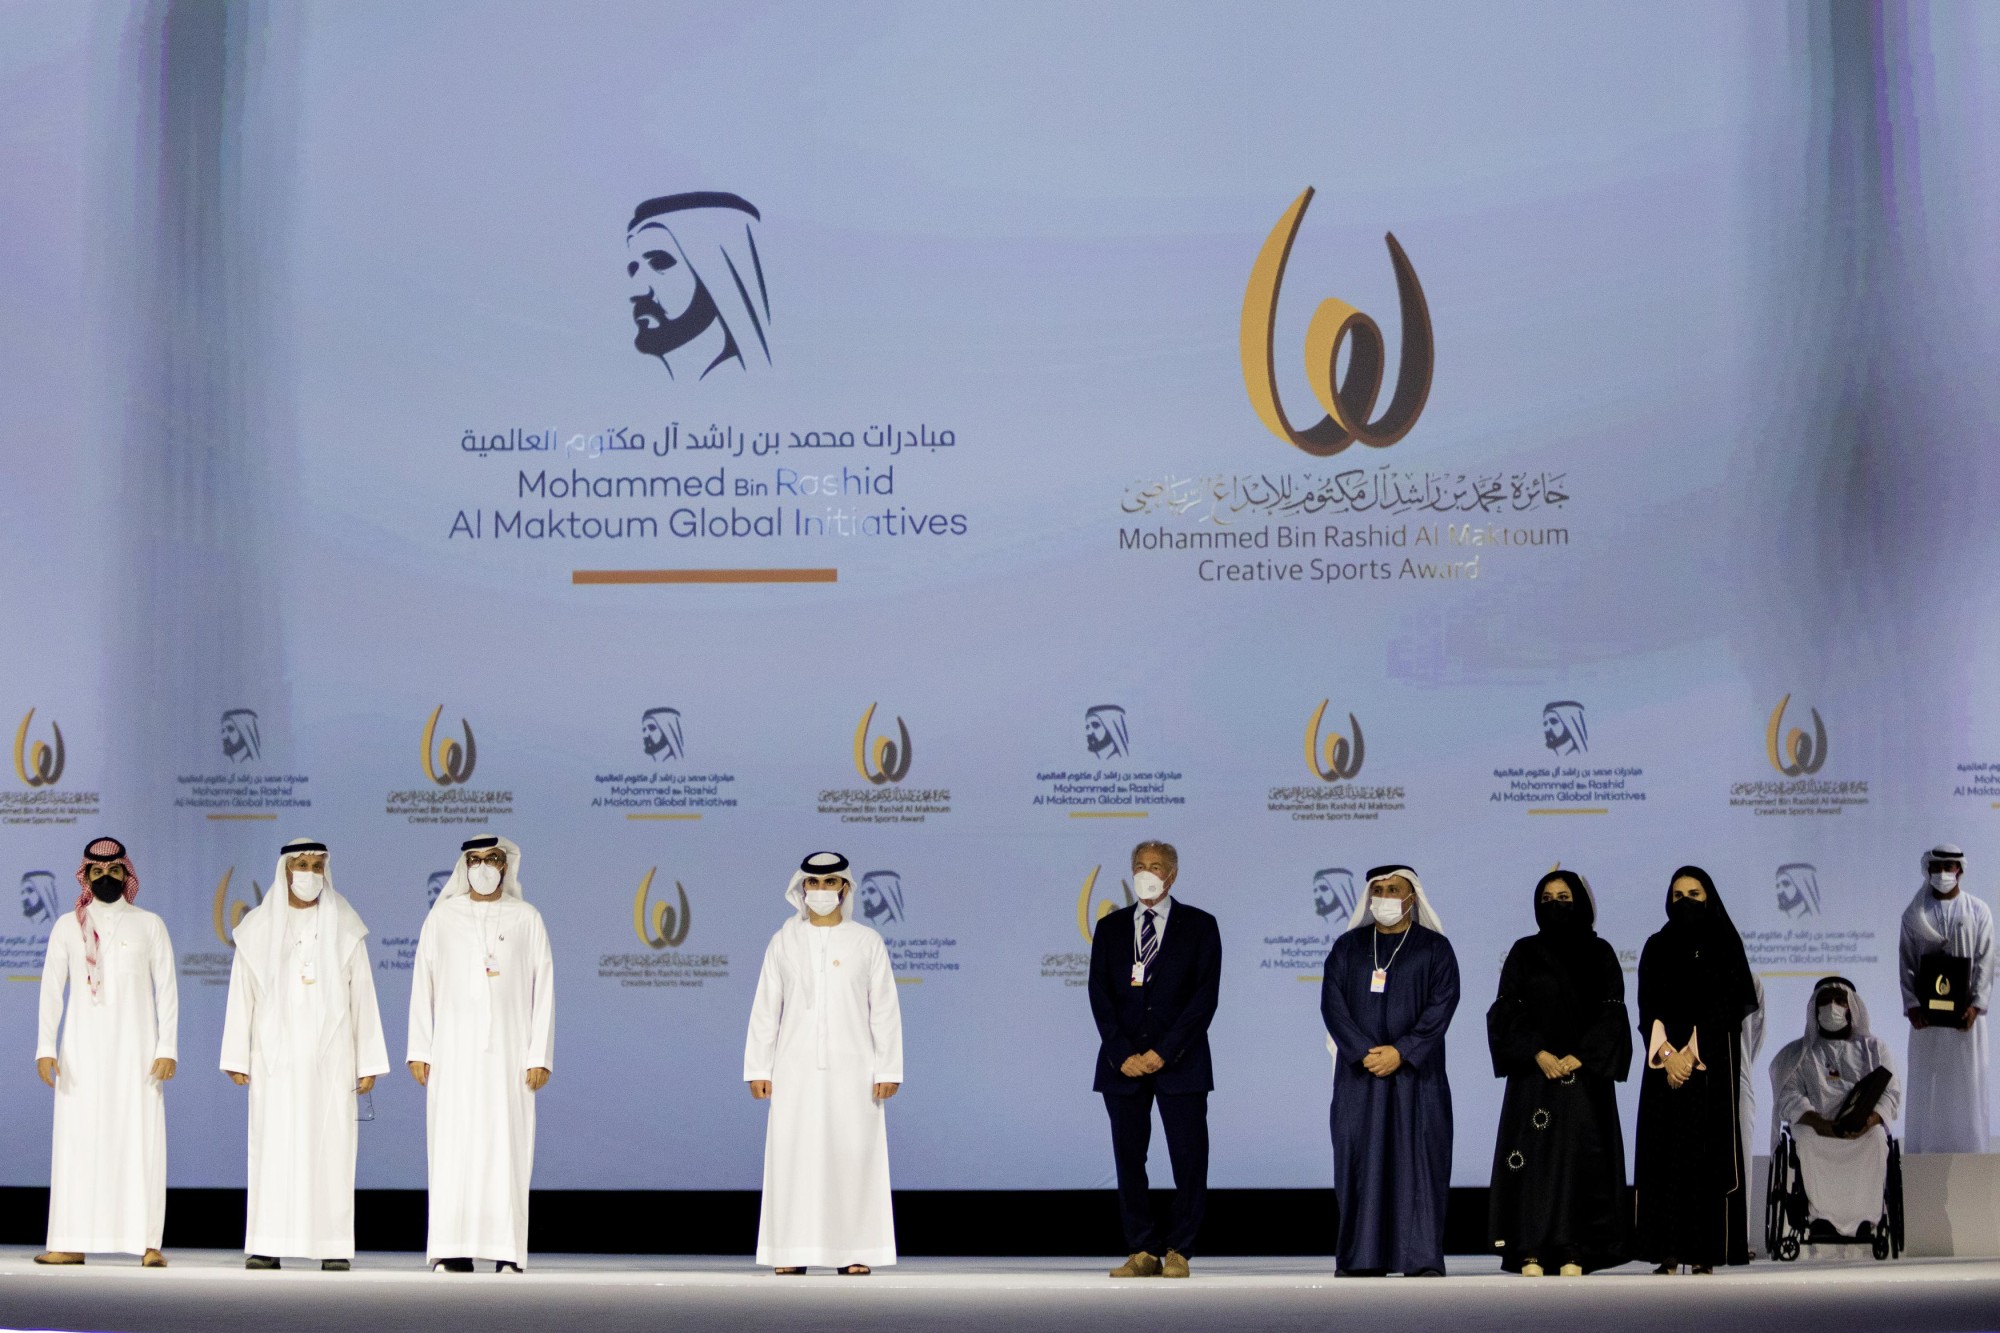 A group photo during the Mohammed Bin Rashid Al Maktoum Creative Sports Award at Dubai Exhibition Centre m31044